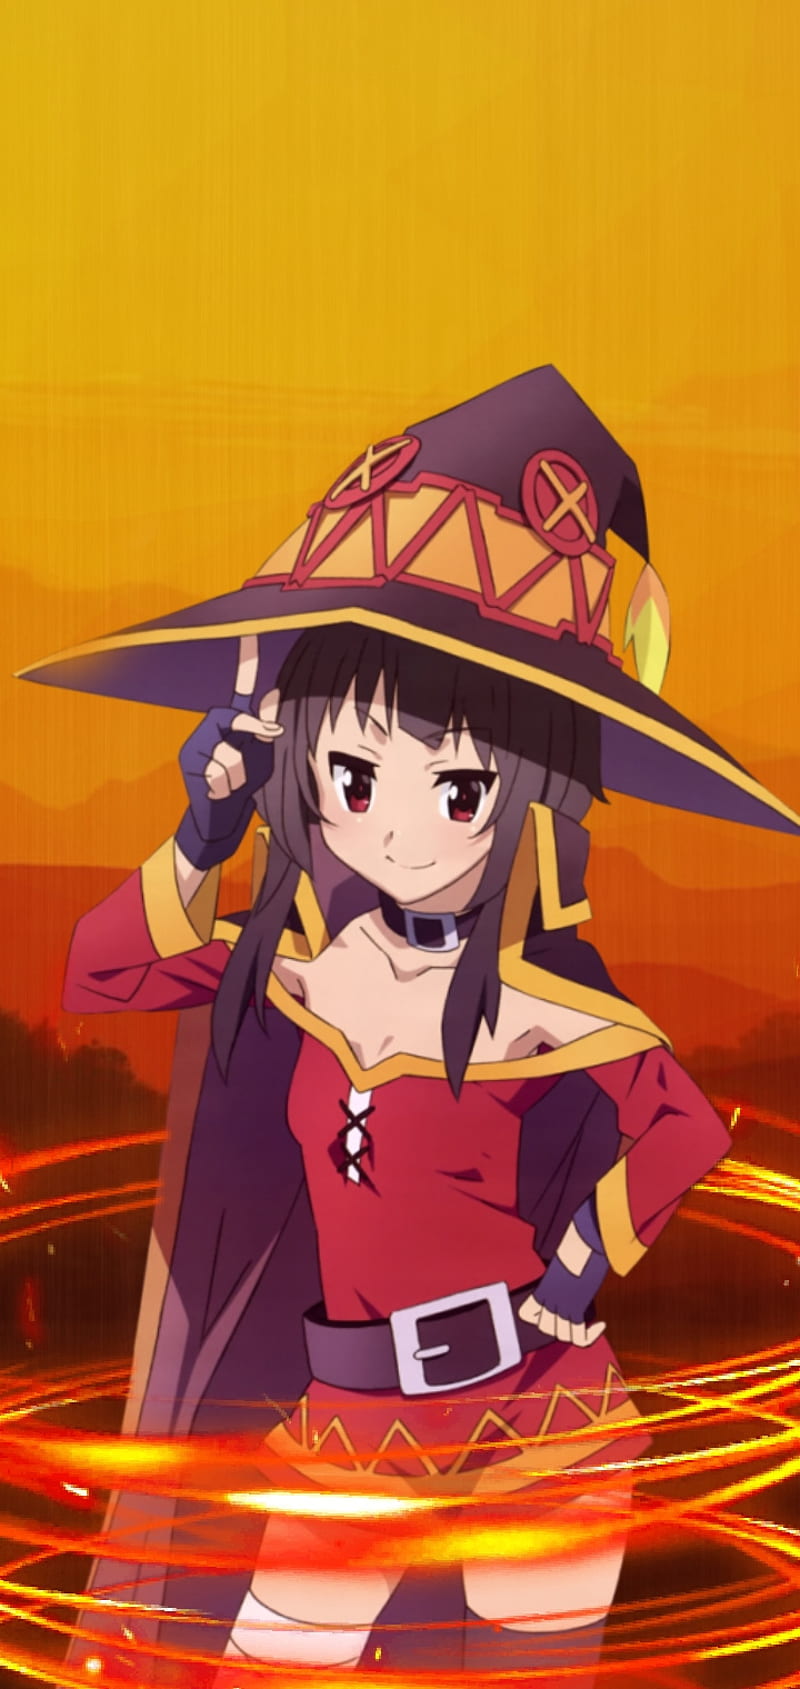 Megumin Anime Explosion Fire Girl Konosuba Mage Hd Mobile Wallpaper Peakpx